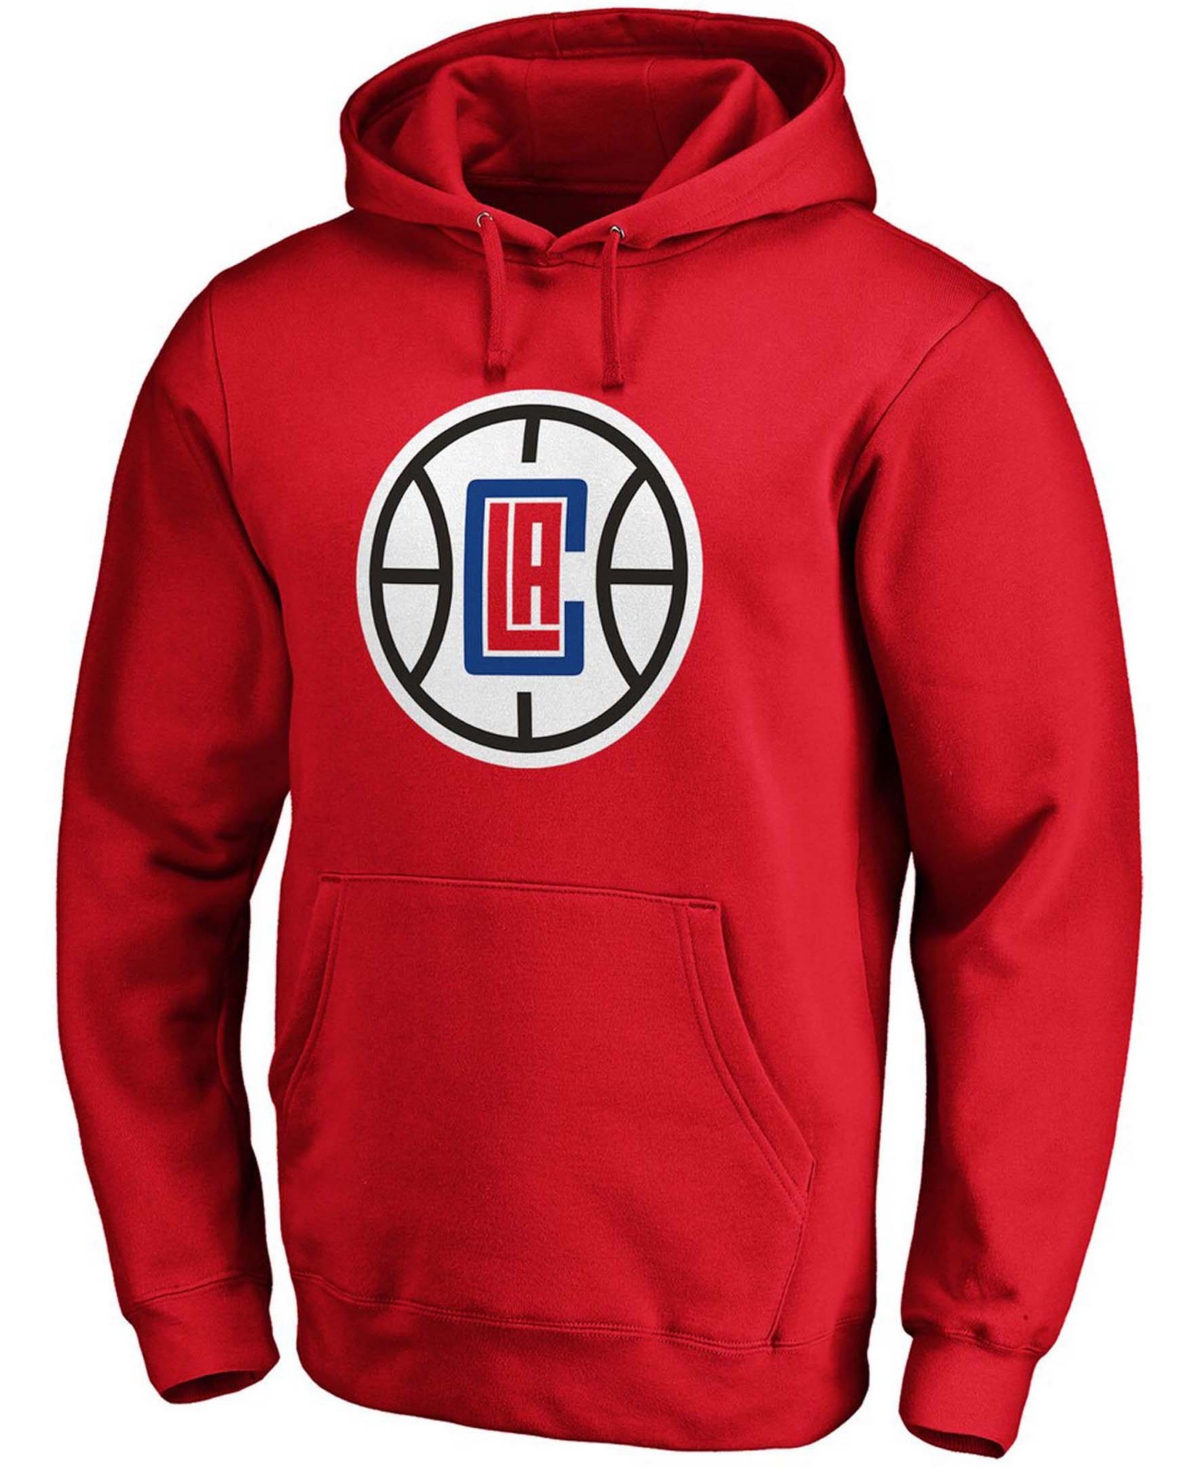 Shop Fanatics Men's Red La Clippers Primary Team Logo Pullover Hoodie